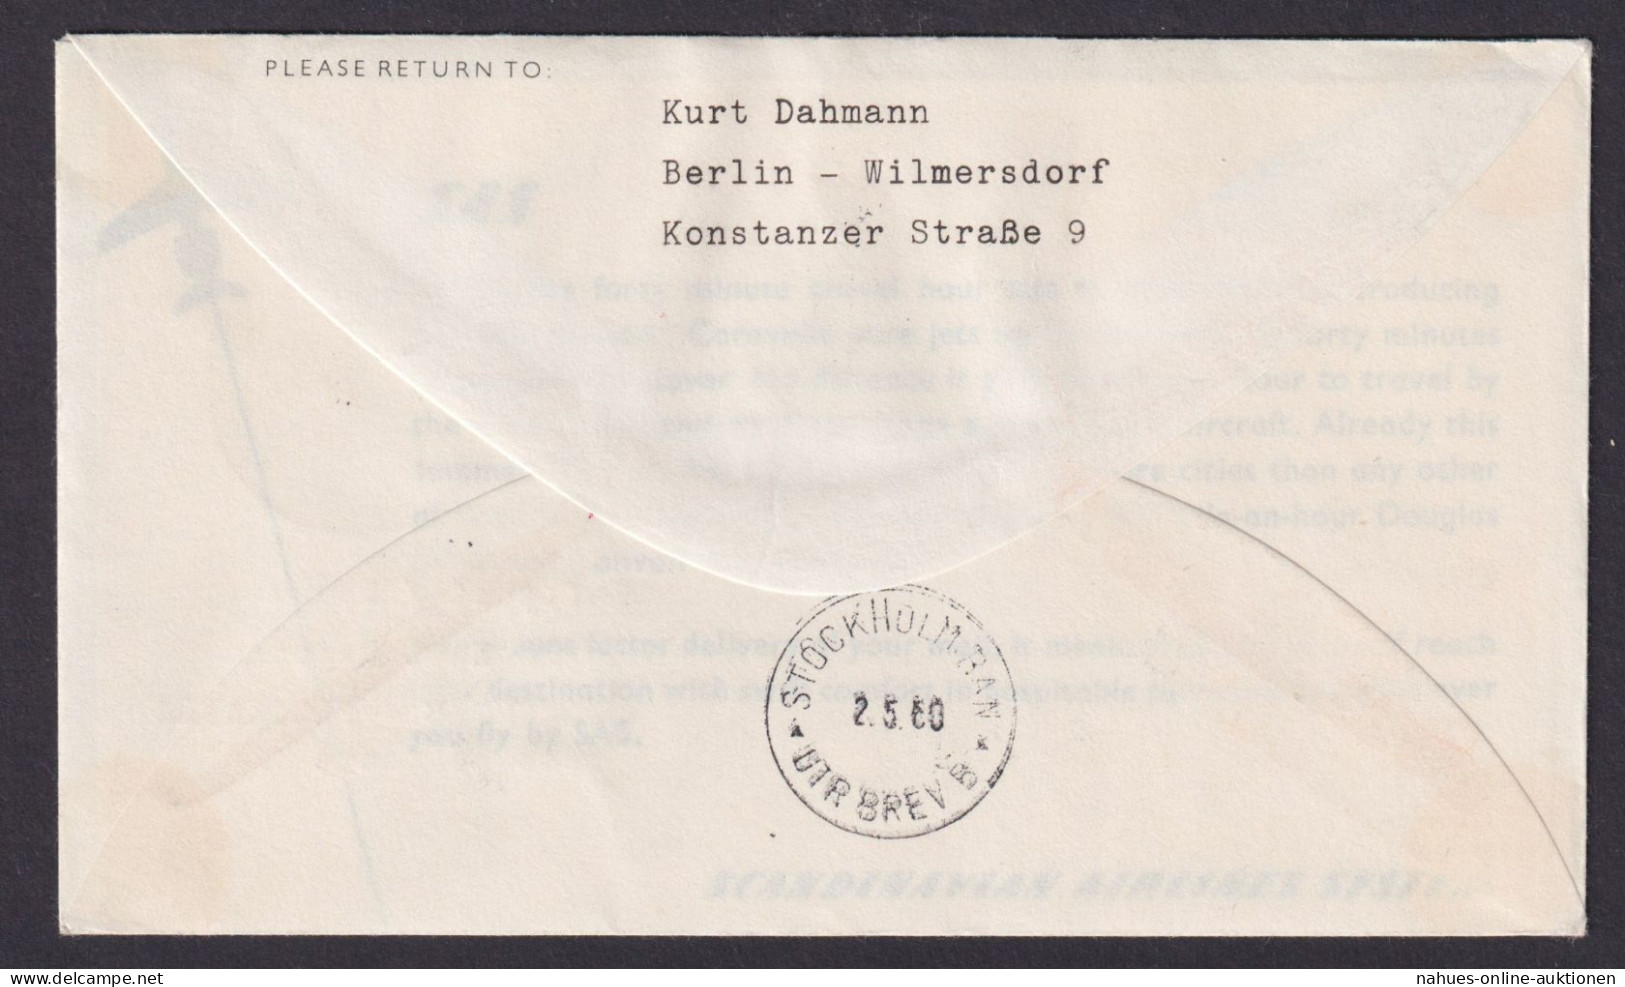 Flugpost Brief Air Mail Erstflug SAS Caravelle Frankfurt Kopenhagen Stockholm - Briefe U. Dokumente